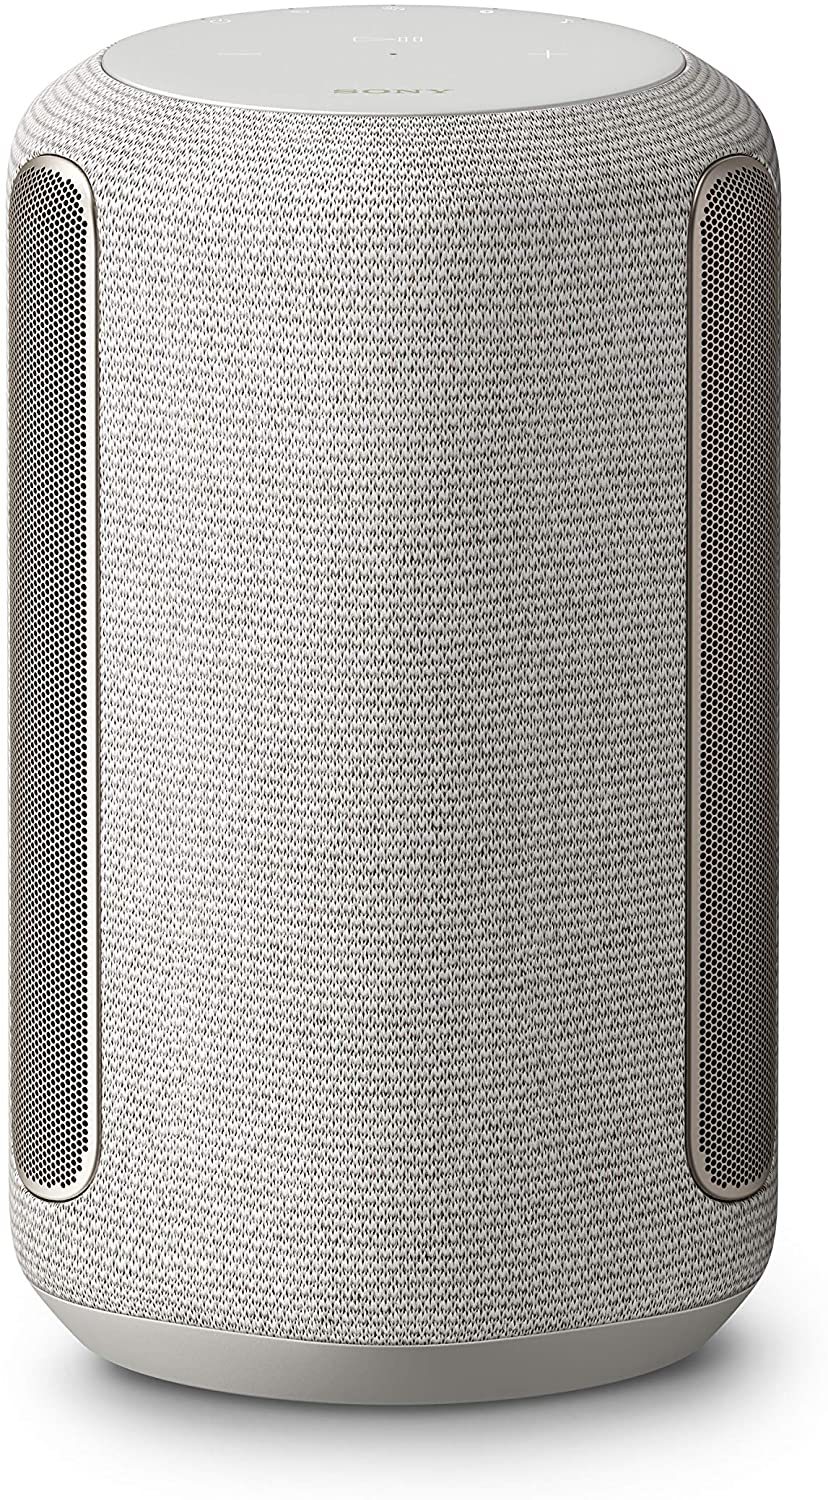 Sony 360 Reality Audio Wi-Fi Enabled Wireless Speaker - Light Gray (Certified Refurbished)